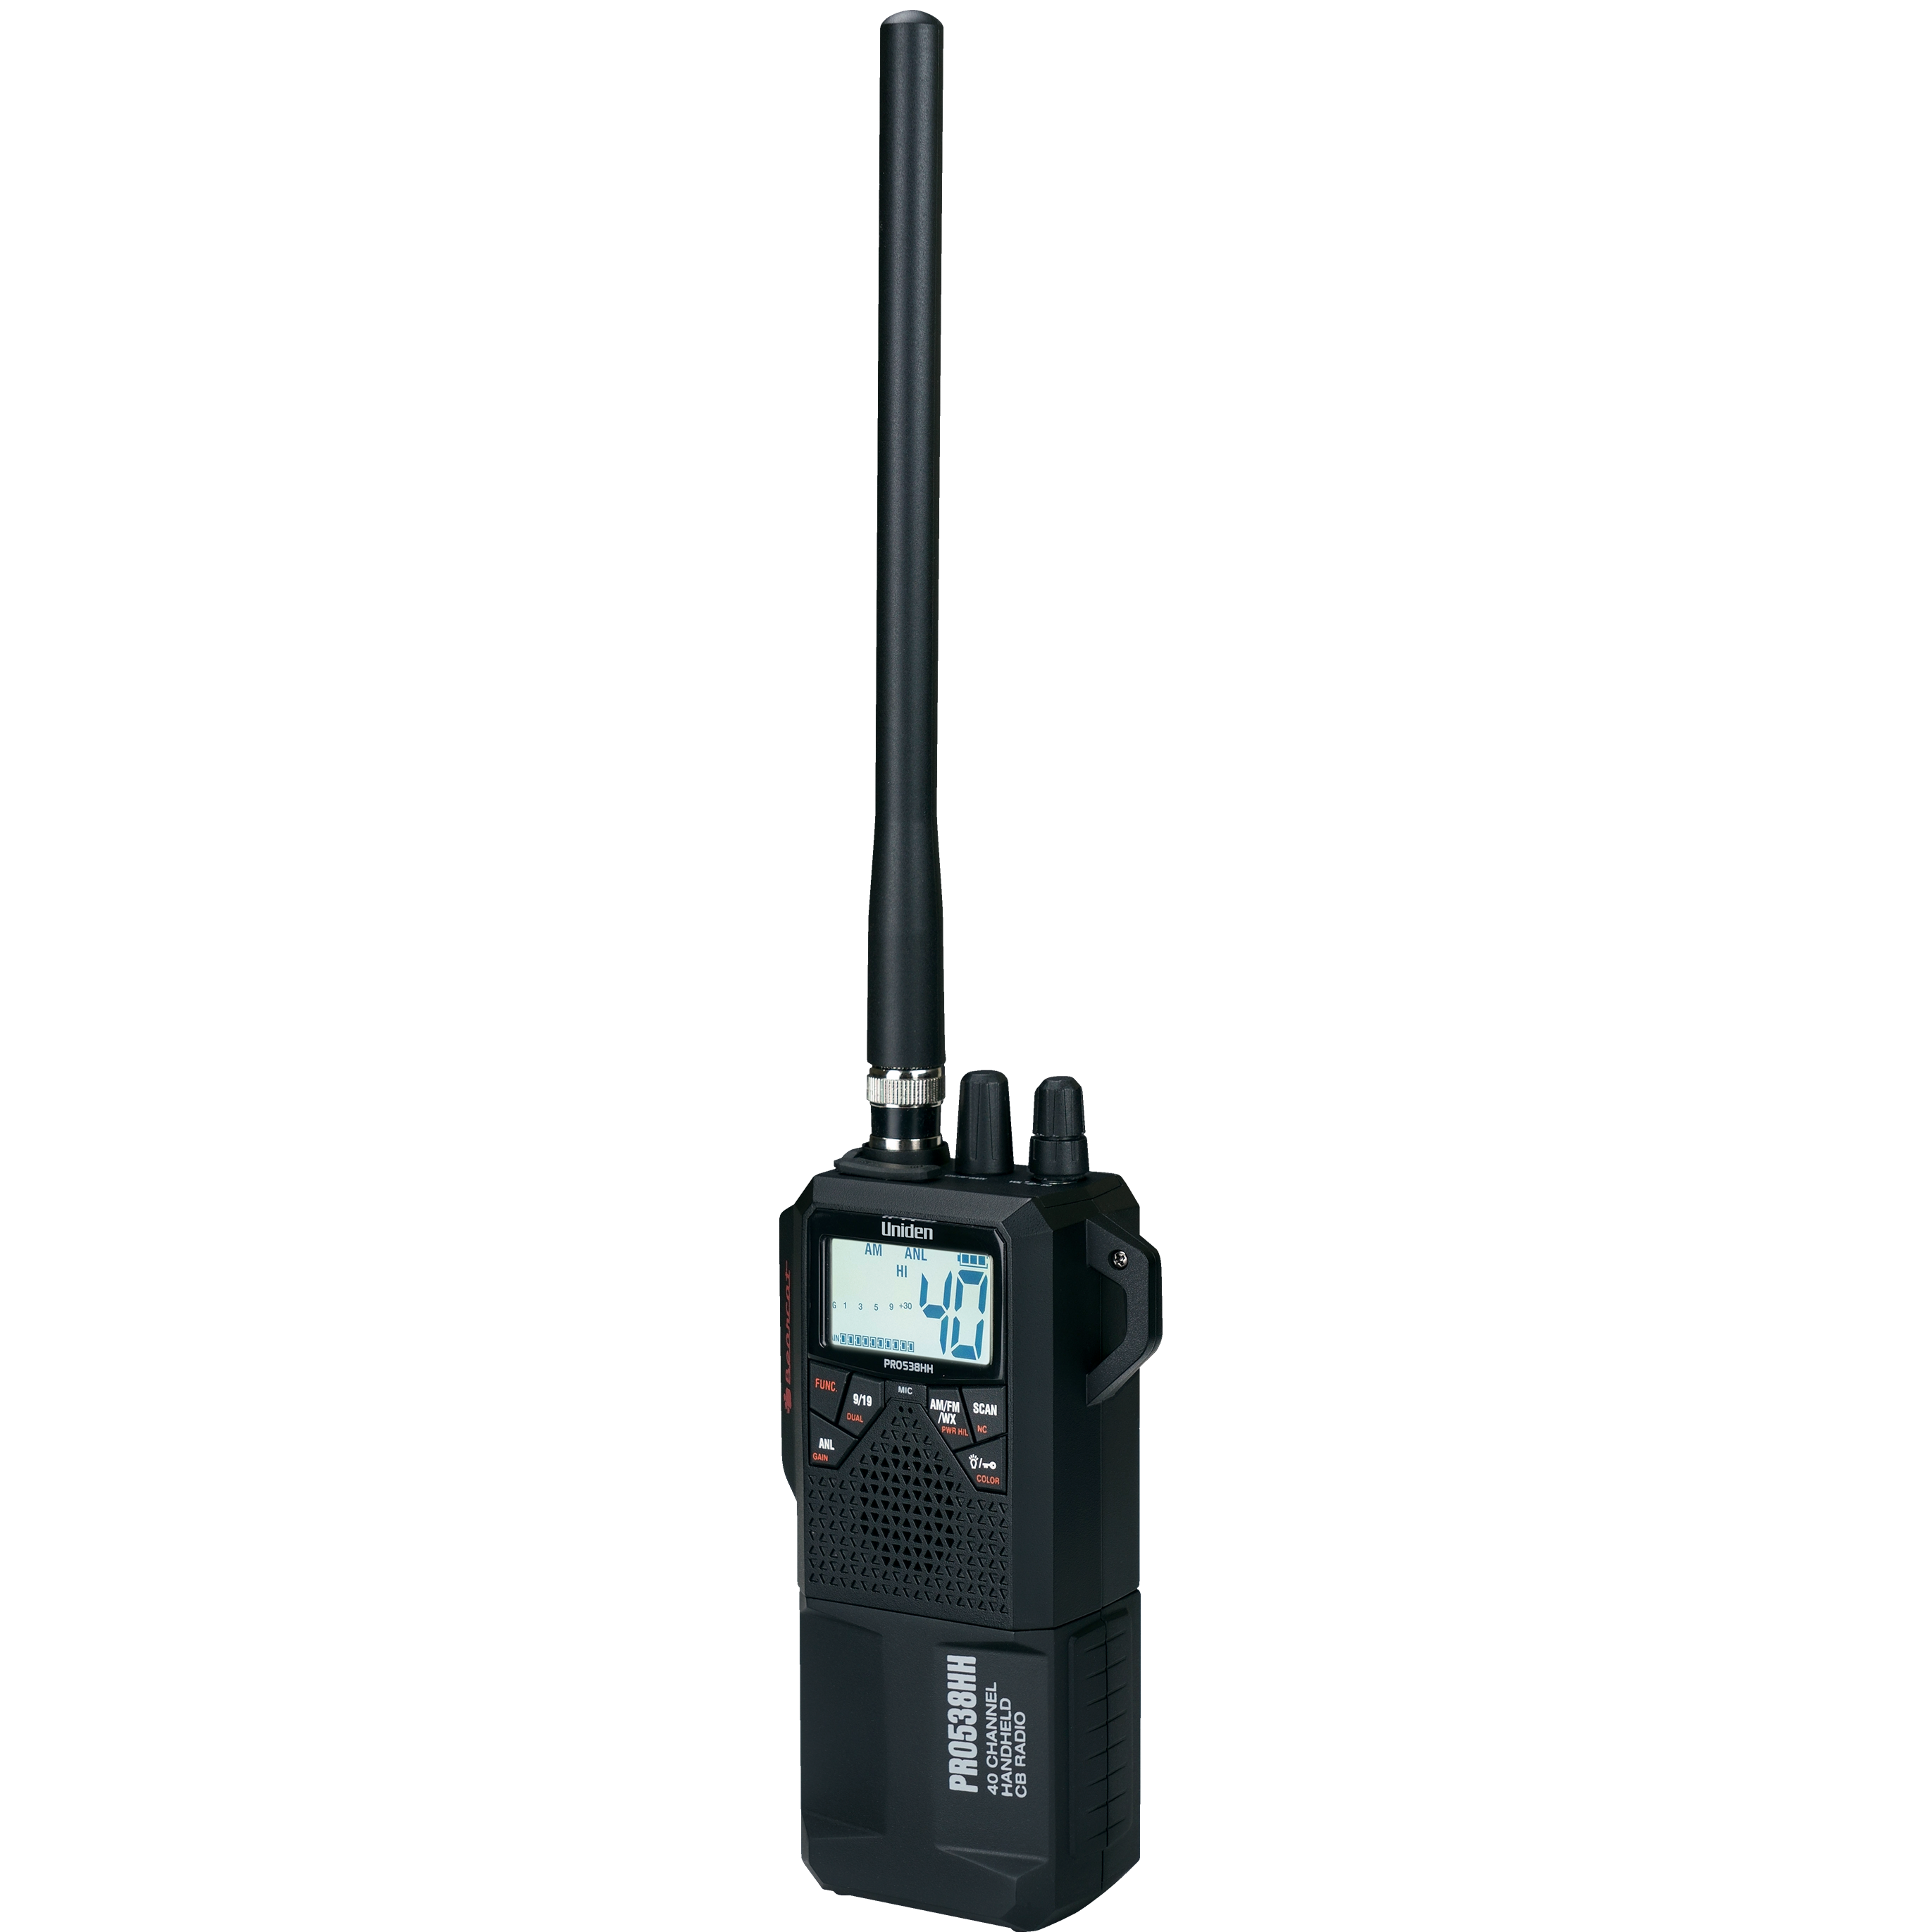 PRO538HHFM Handheld AM/FM CB Radio